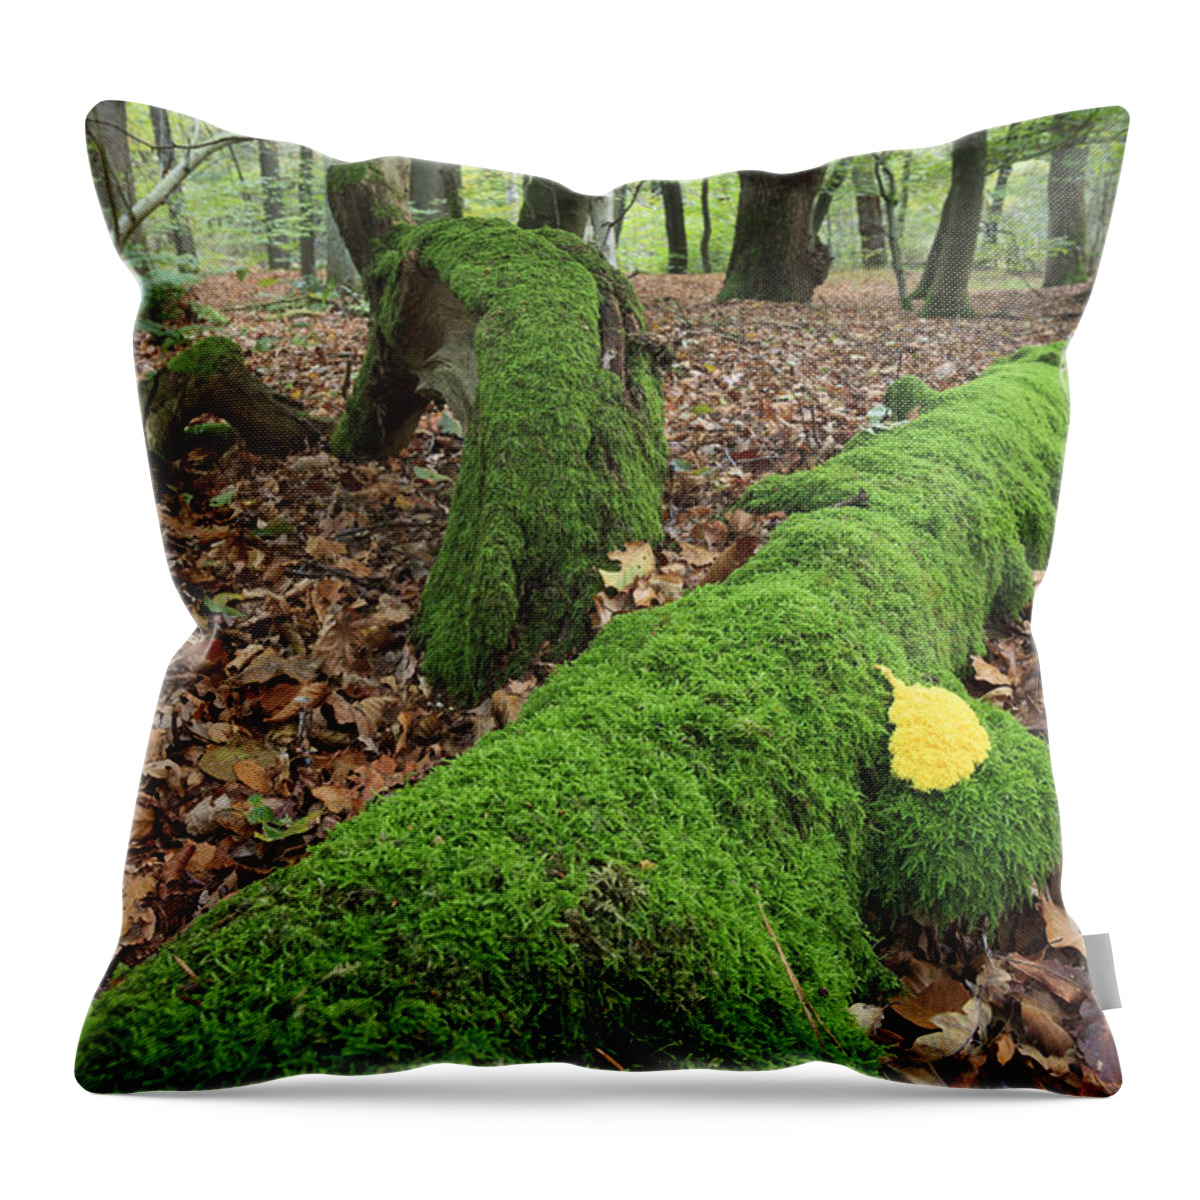 Heike Odermatt Throw Pillow featuring the photograph Slime Mold With Moss In Beech Forest by Heike Odermatt